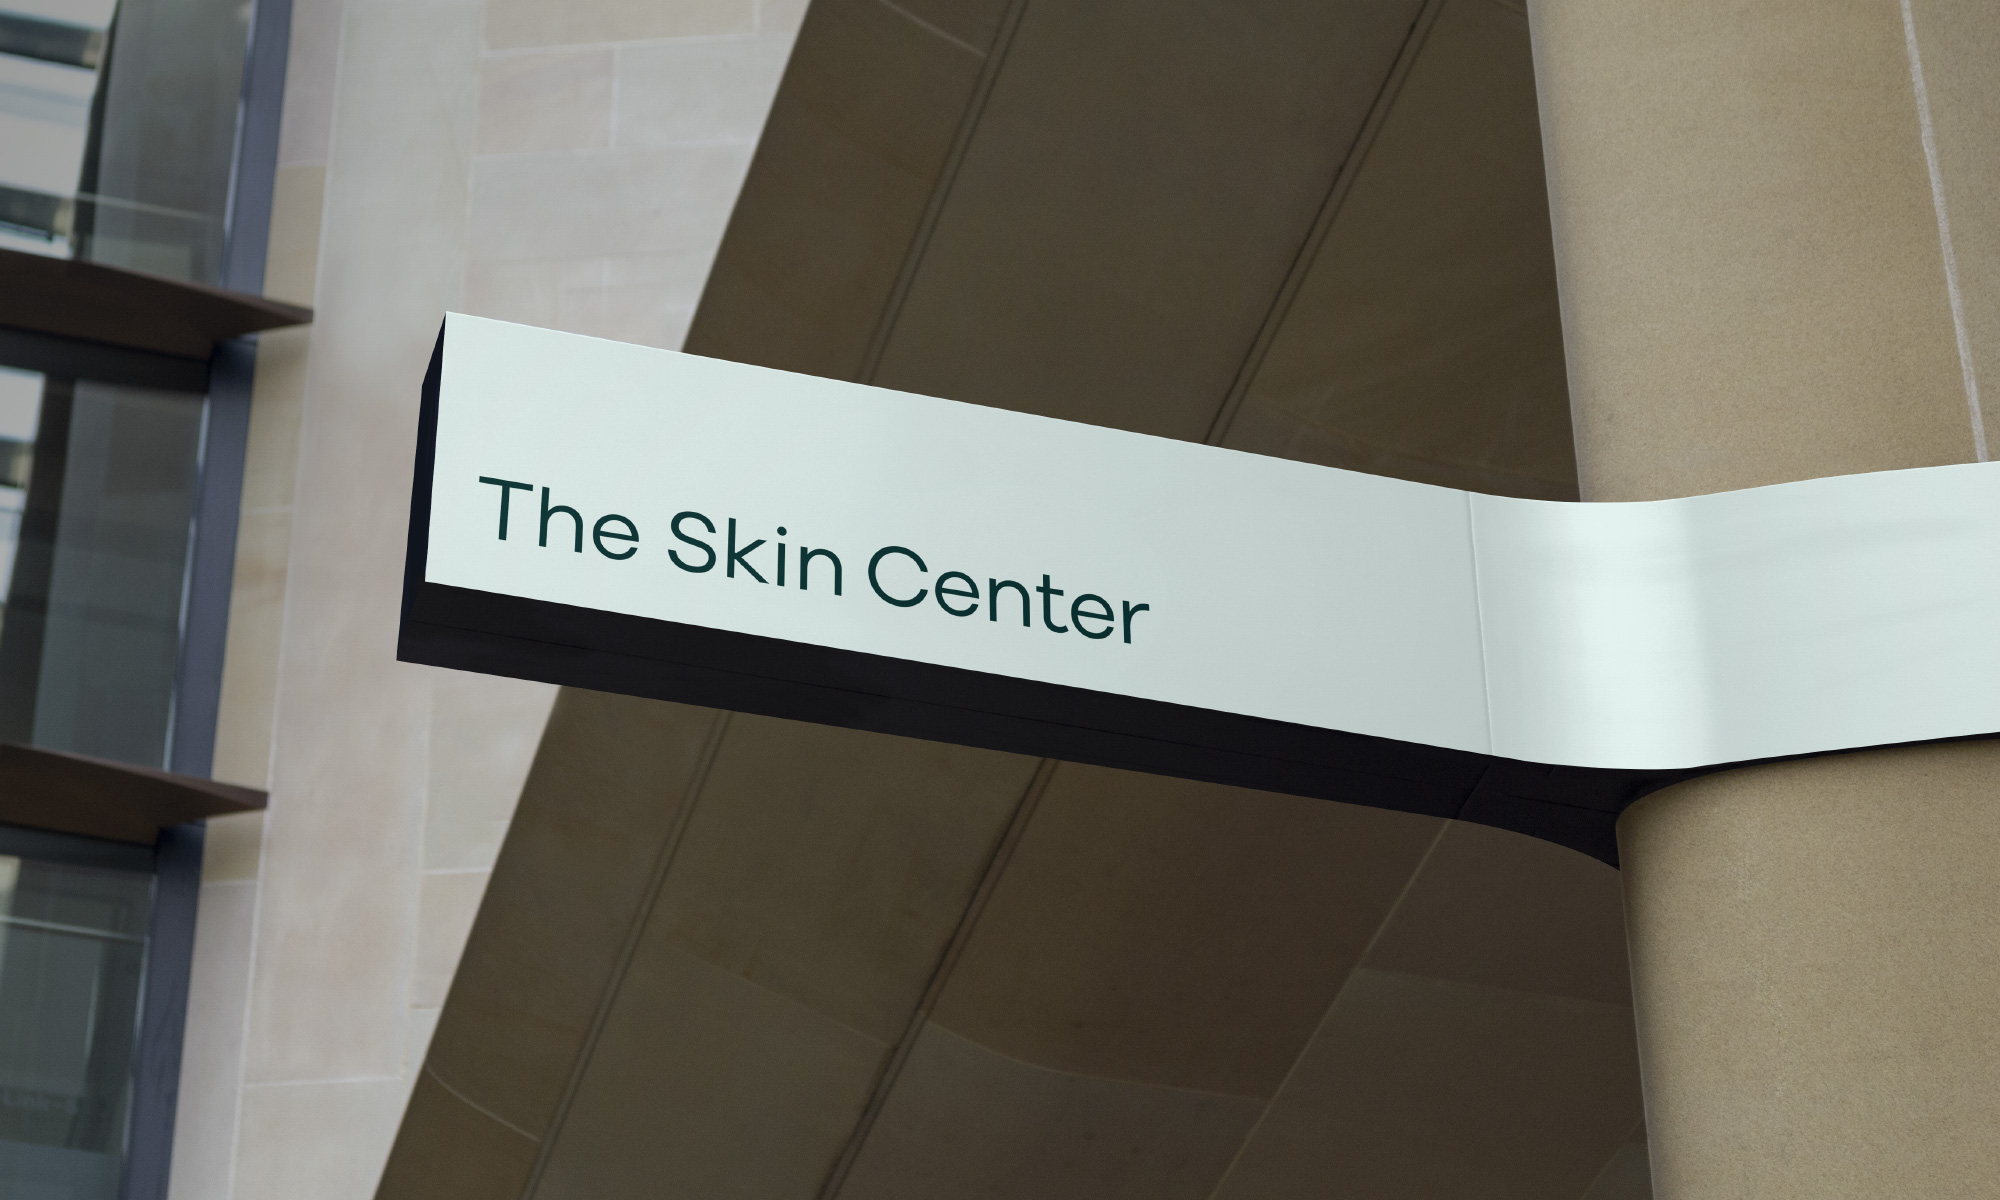 The Skin Center logo signage